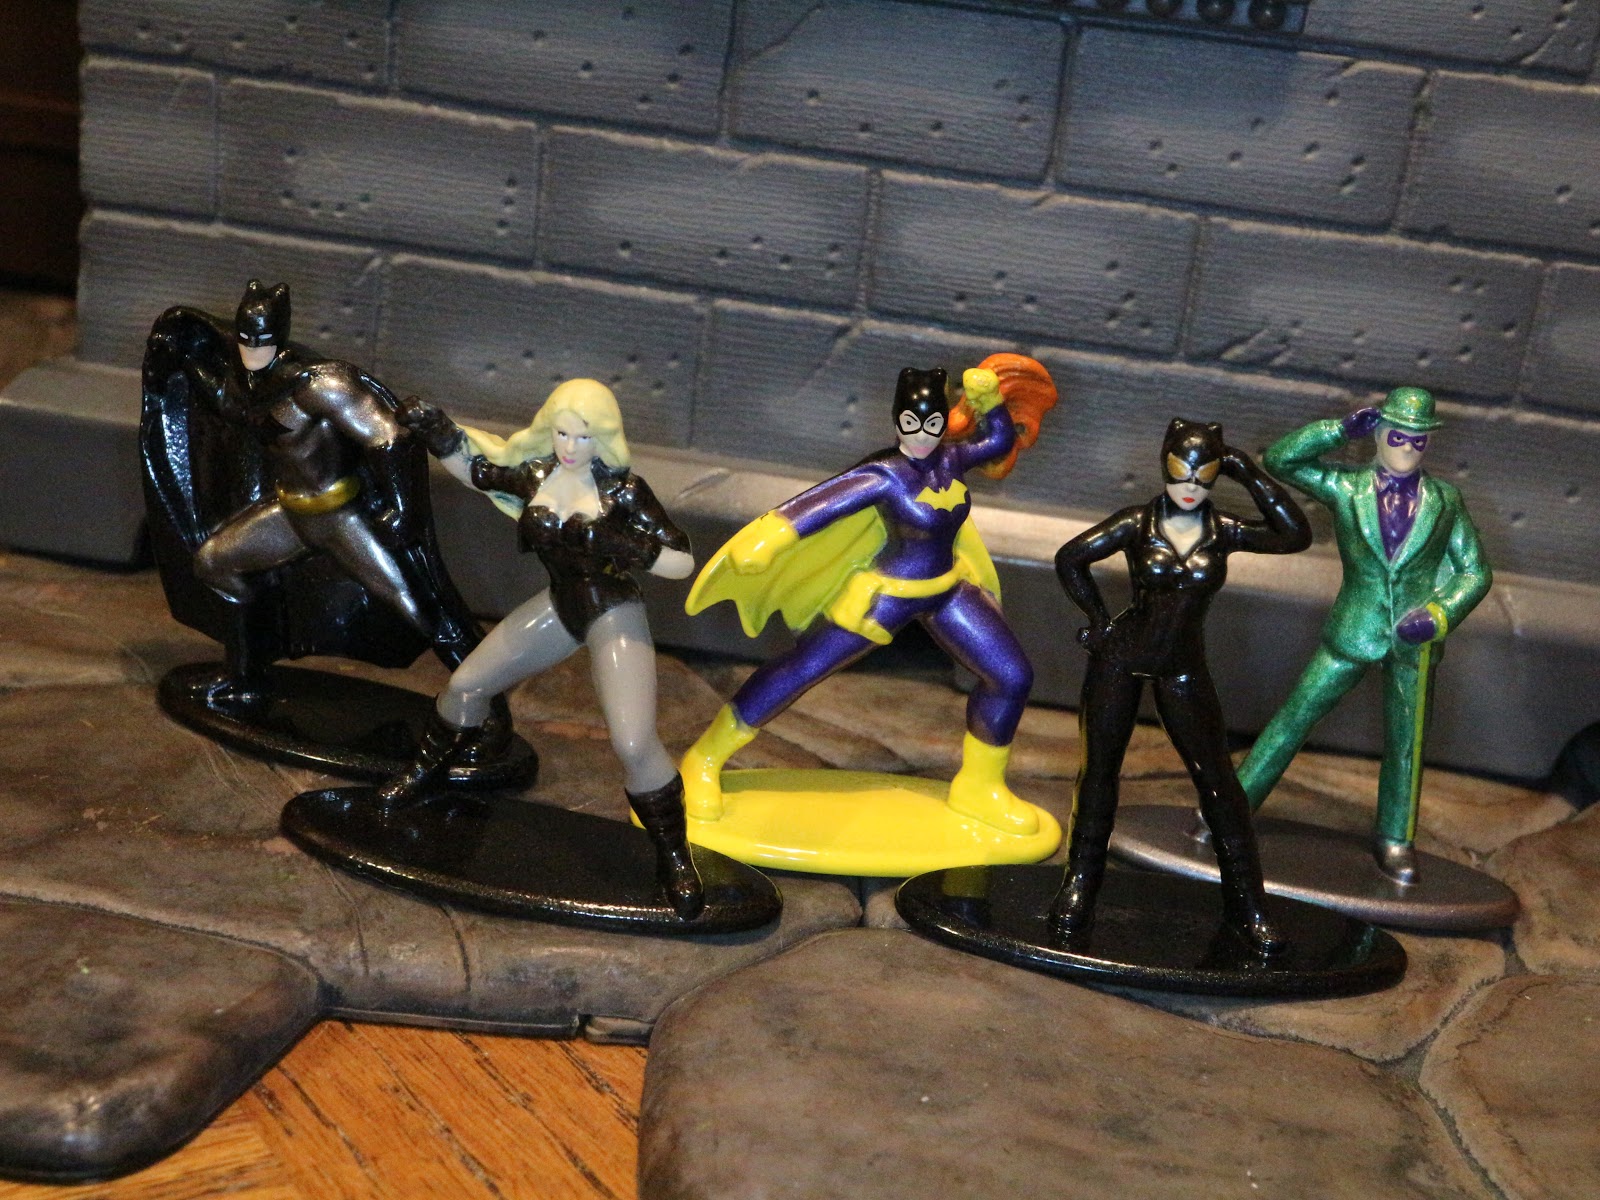 Is for sale online Jada Toys M370 DC Comics Catwoman Metals Figure 10cm 